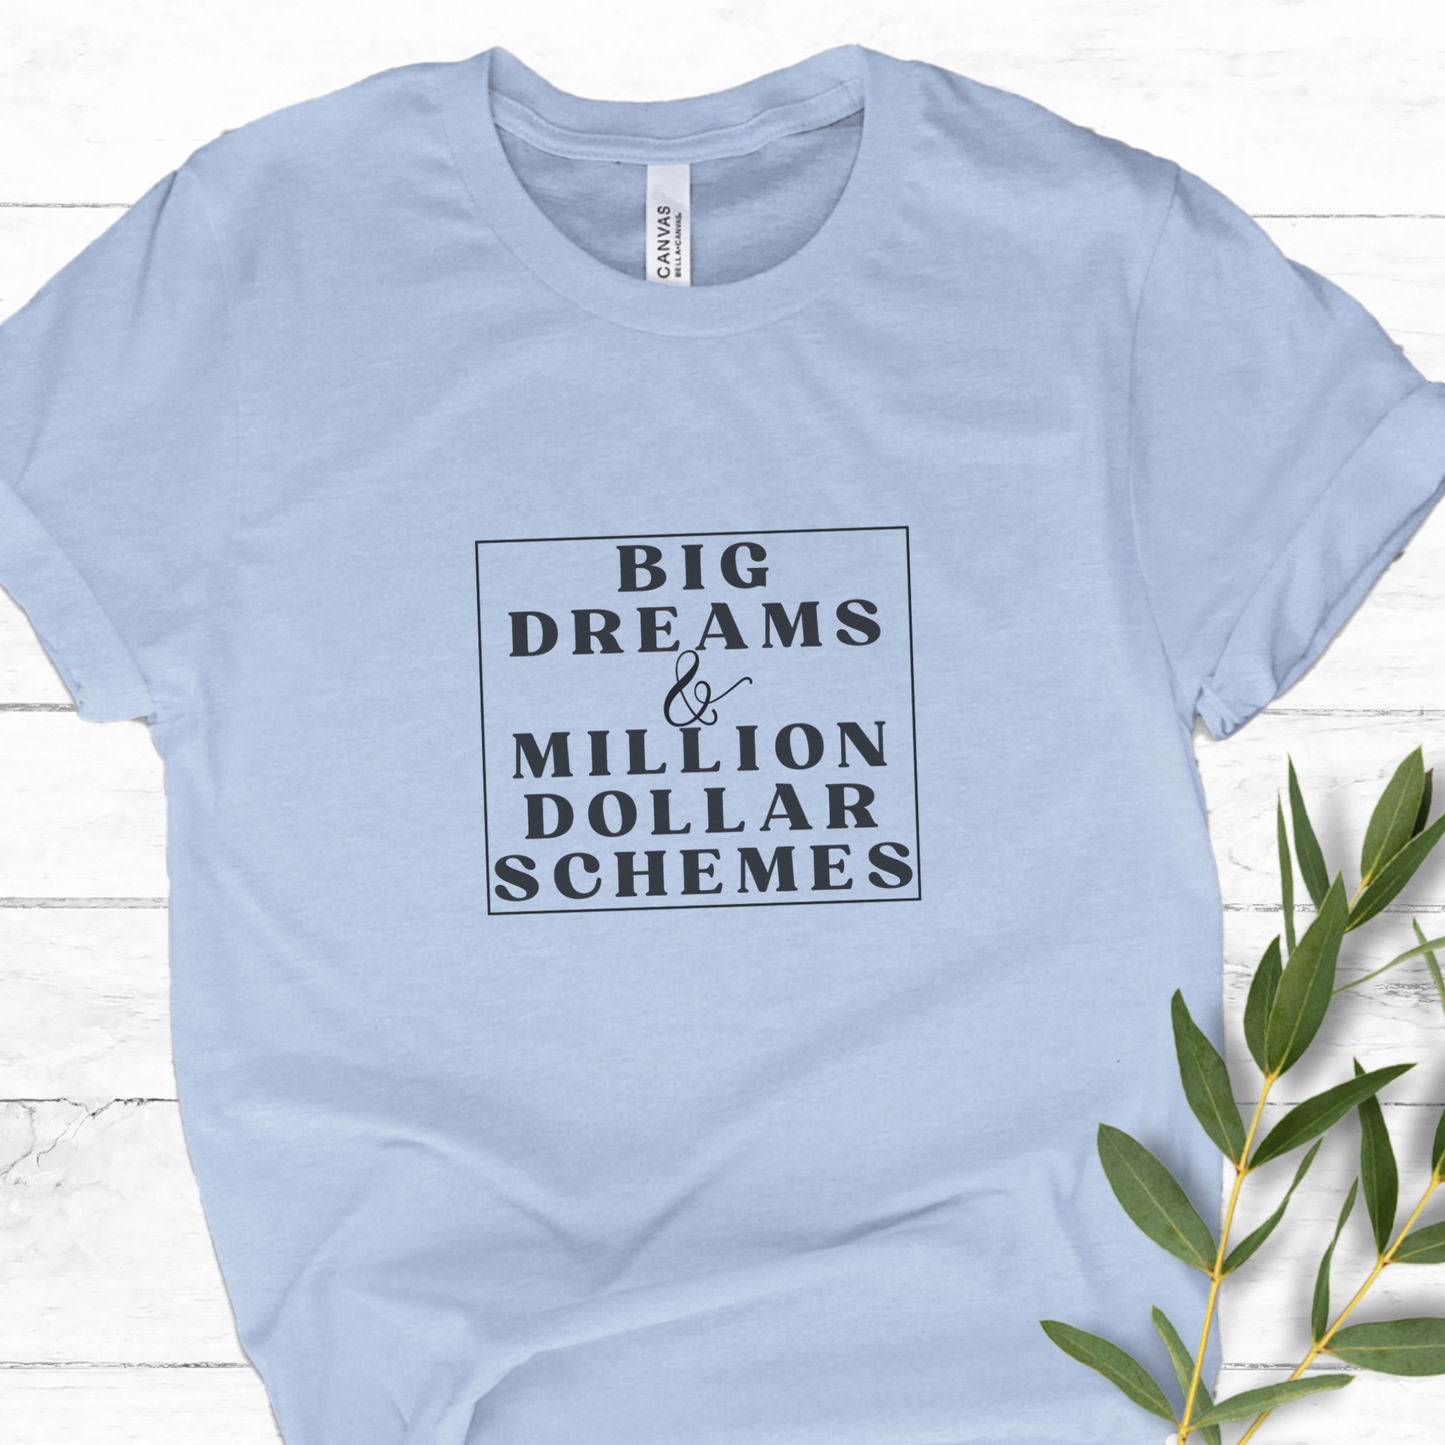 Dreams & Schemes T-Shirt